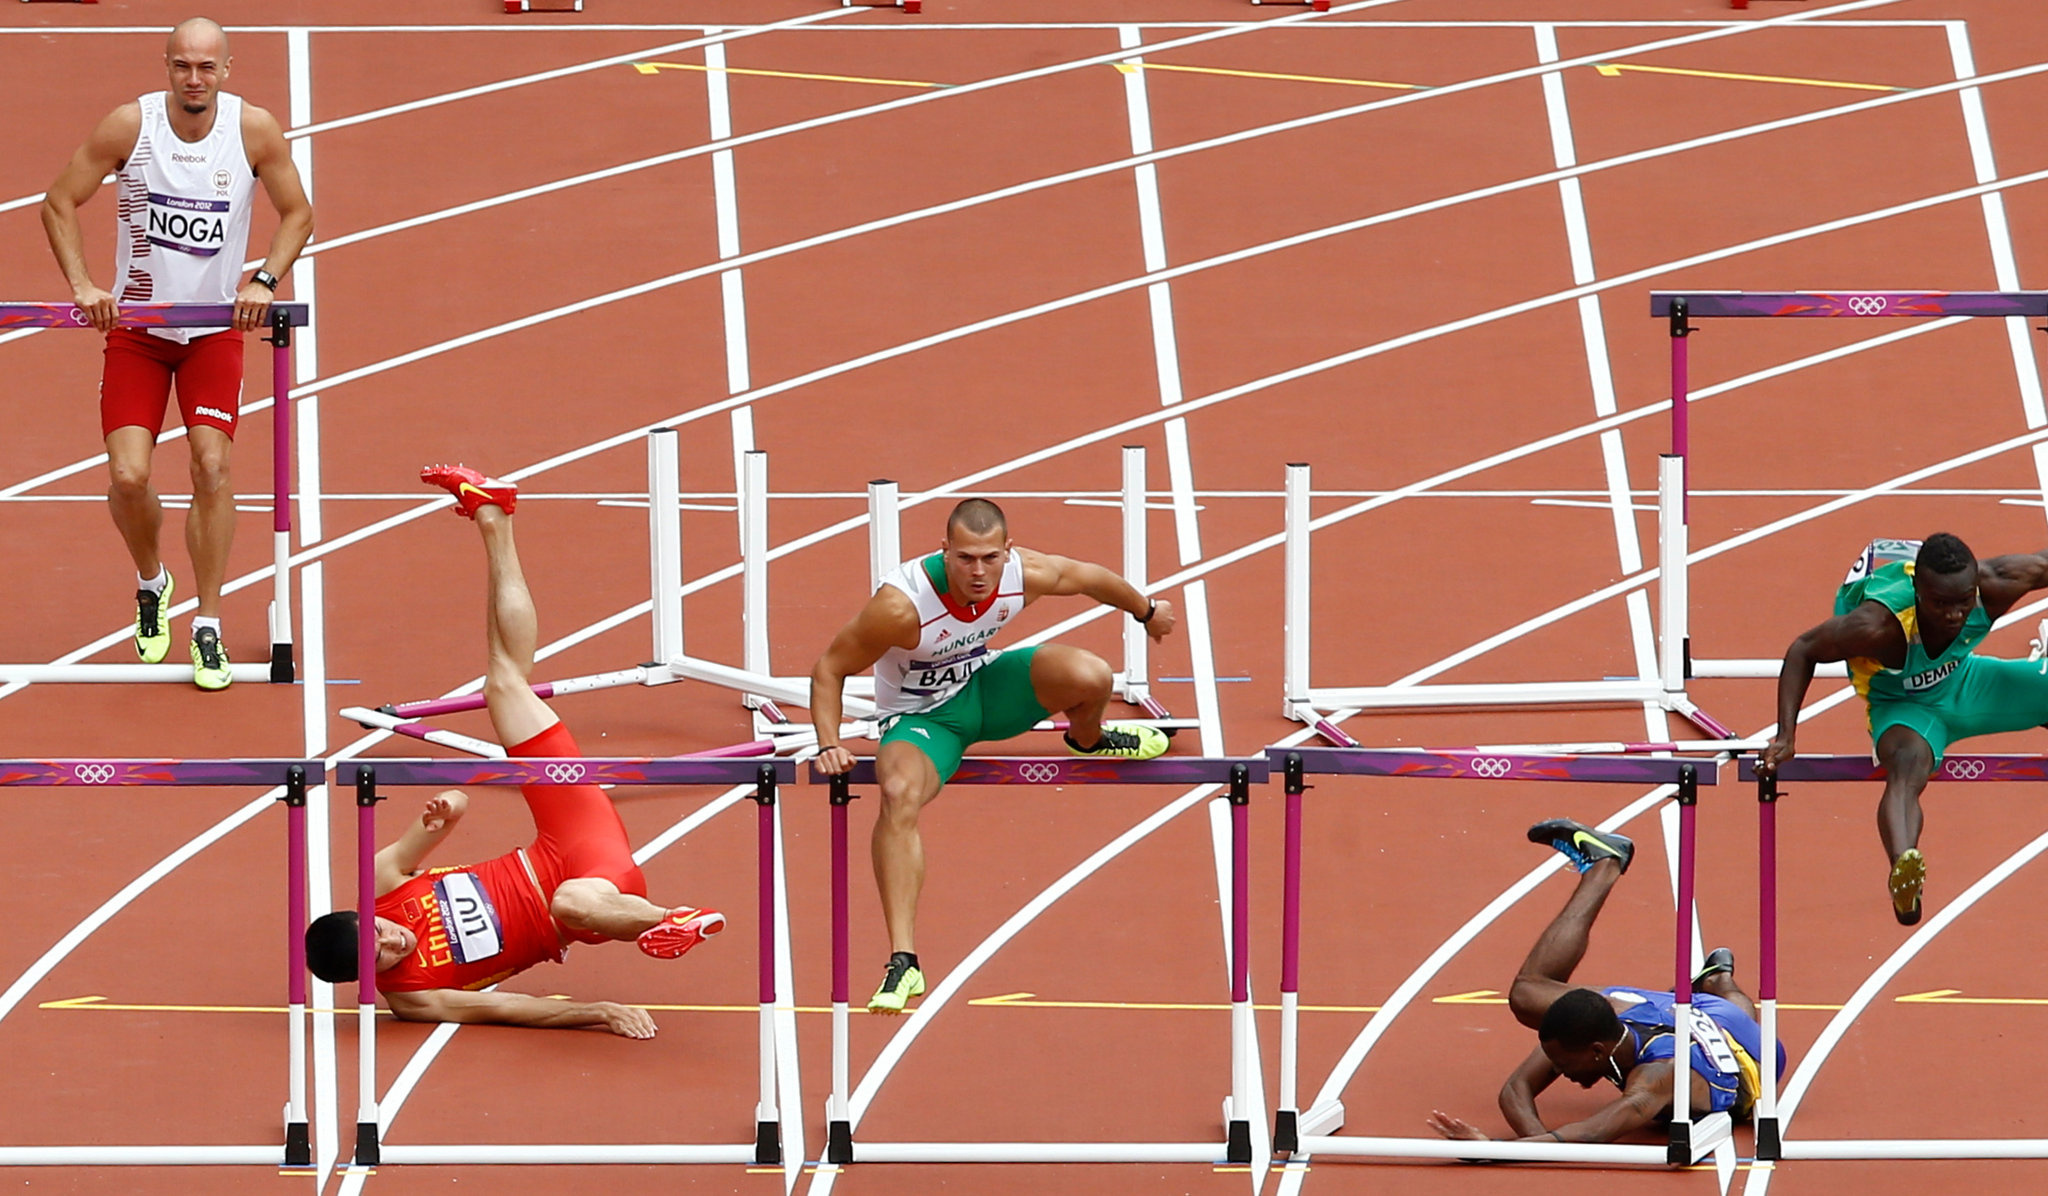 Hurdling: Liu Xiang, London 2012 Summer Olympics, Hurdle race, Sprint hurdles. 2050x1200 HD Background.